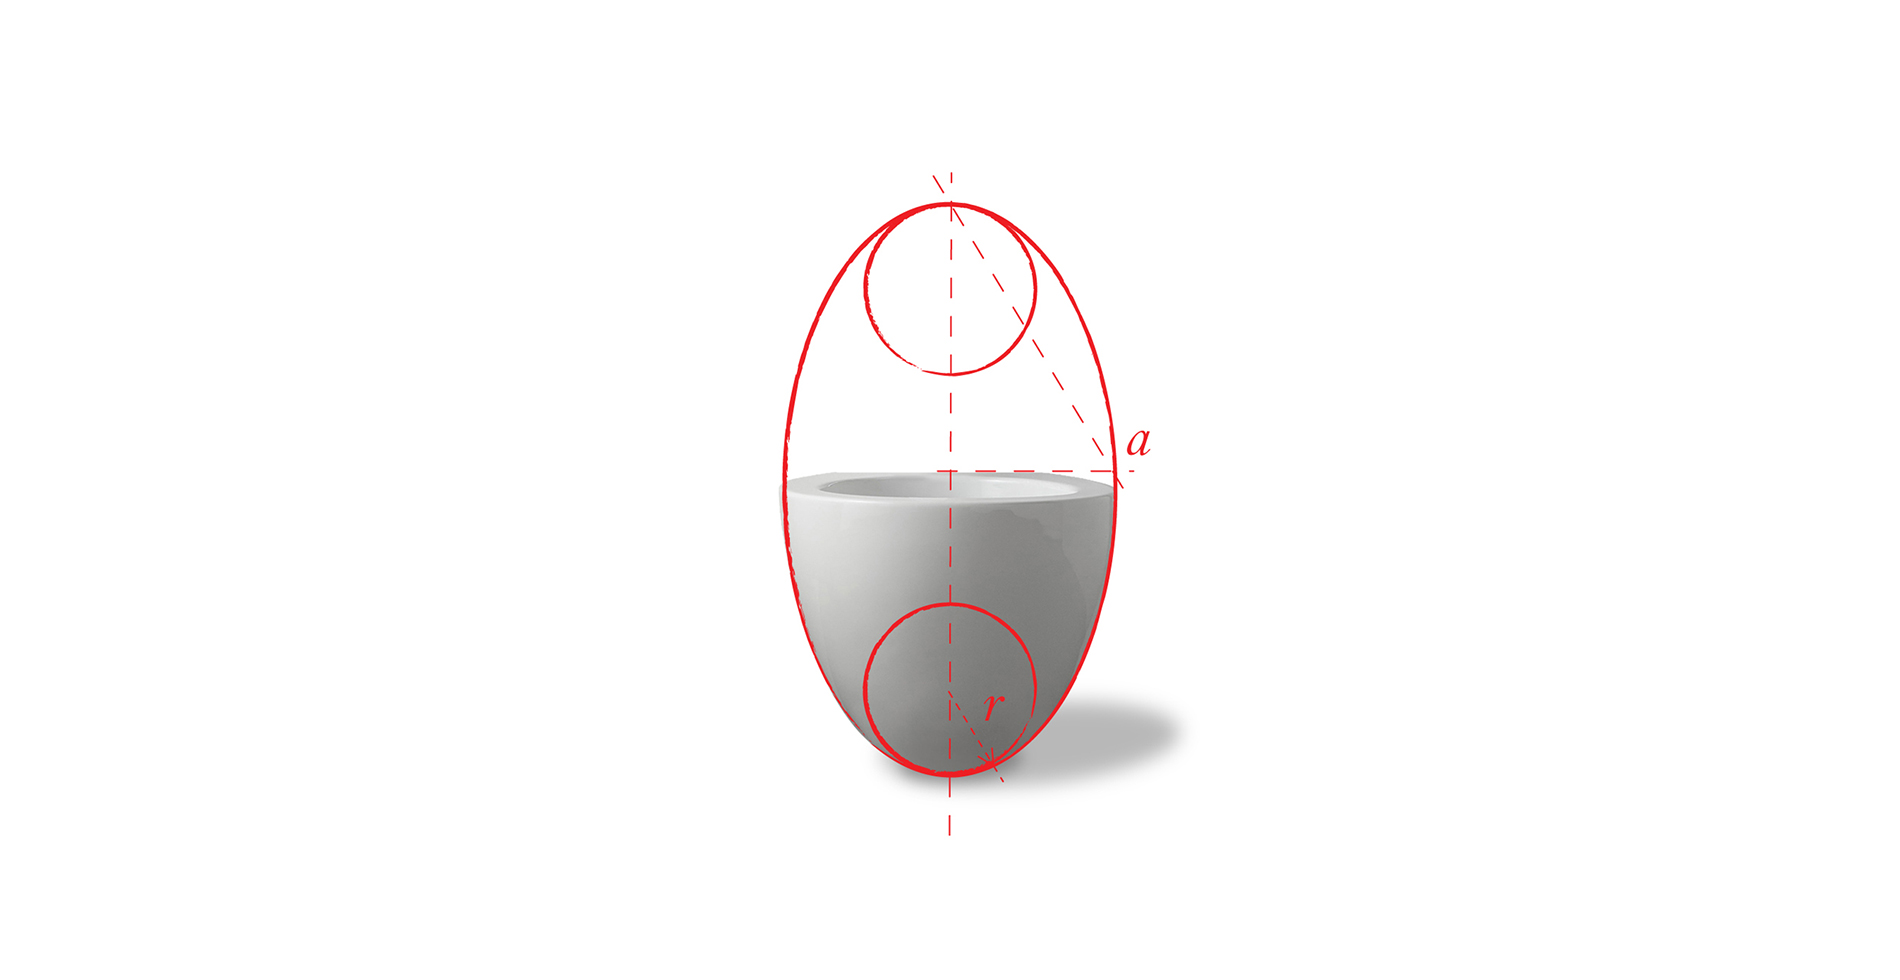 Bowl ceramic sanitary ware toilet | Bathroom deco inspired in nature egg shape | Design by Antonio Pascale for Ceramica Globo